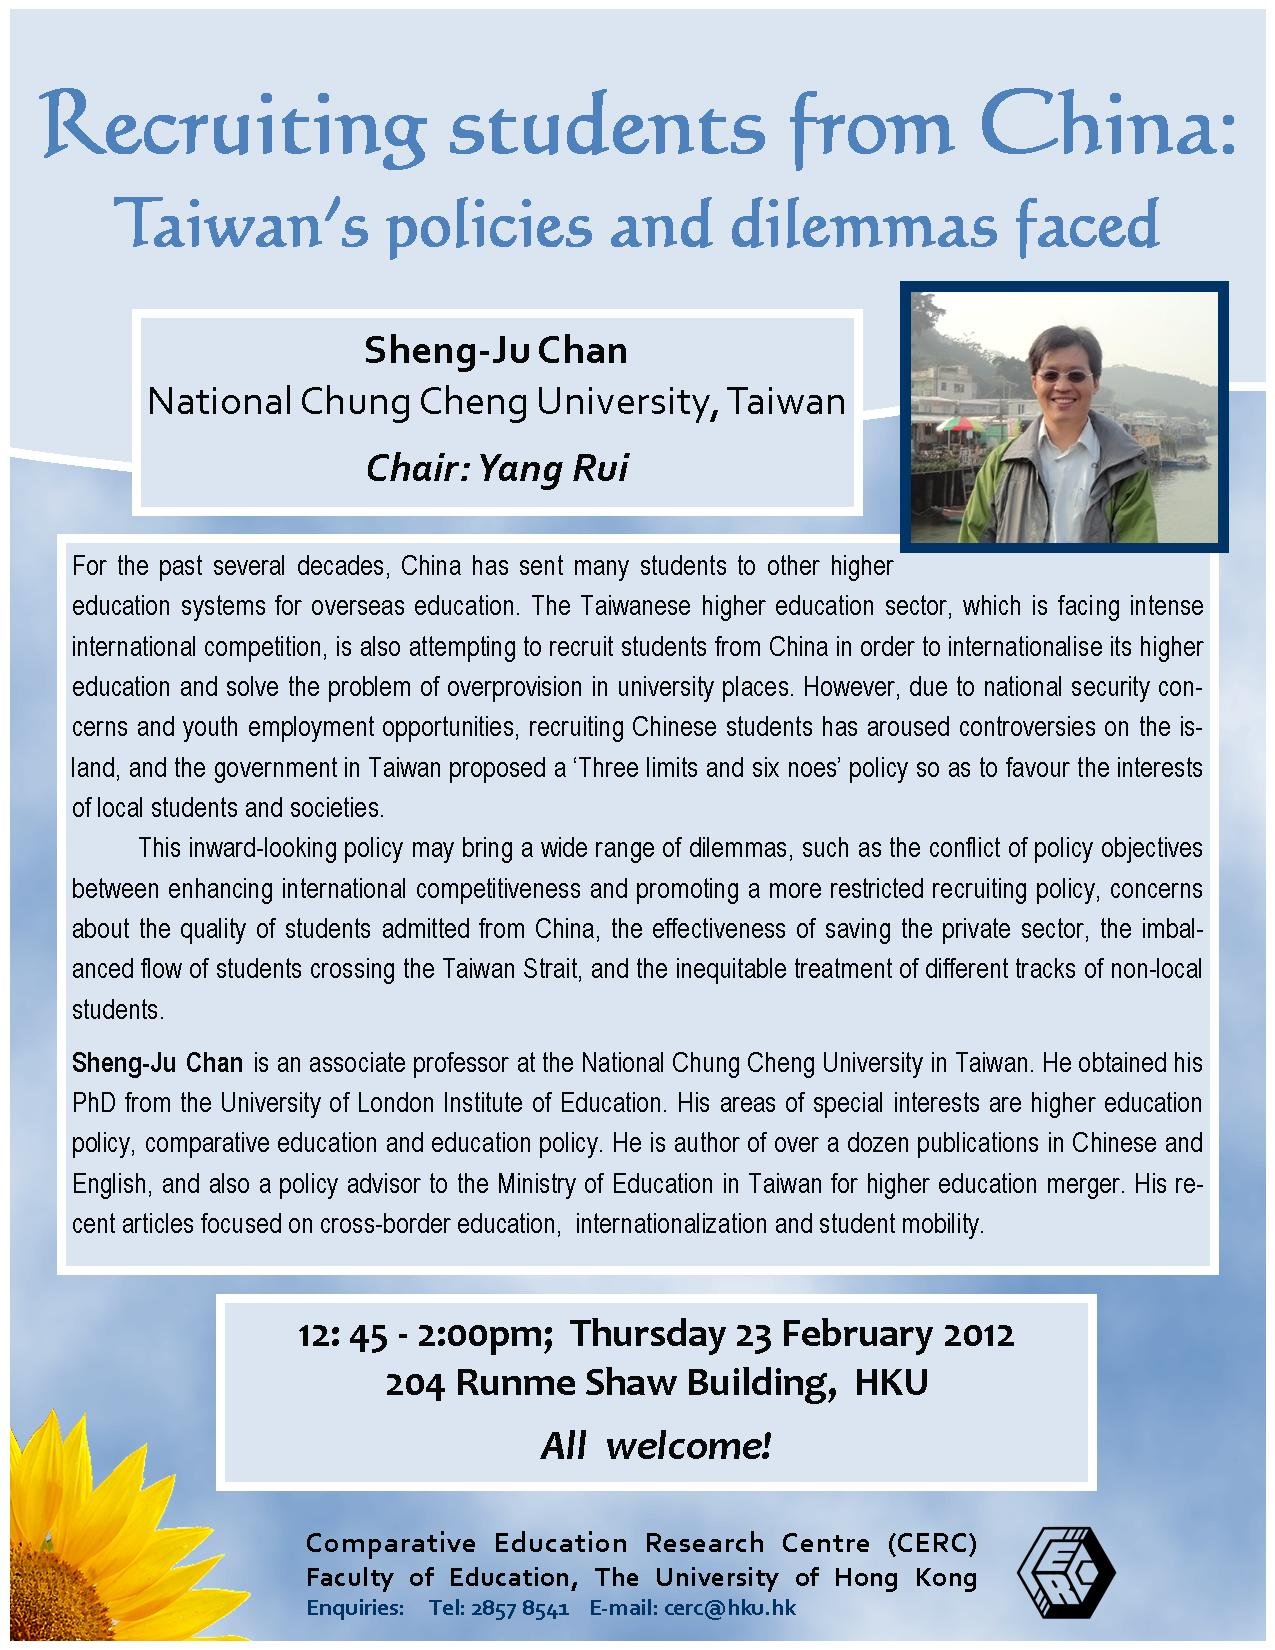 Seminar - Recruiting students from China: Taiwan’s policies and dilemmas faced